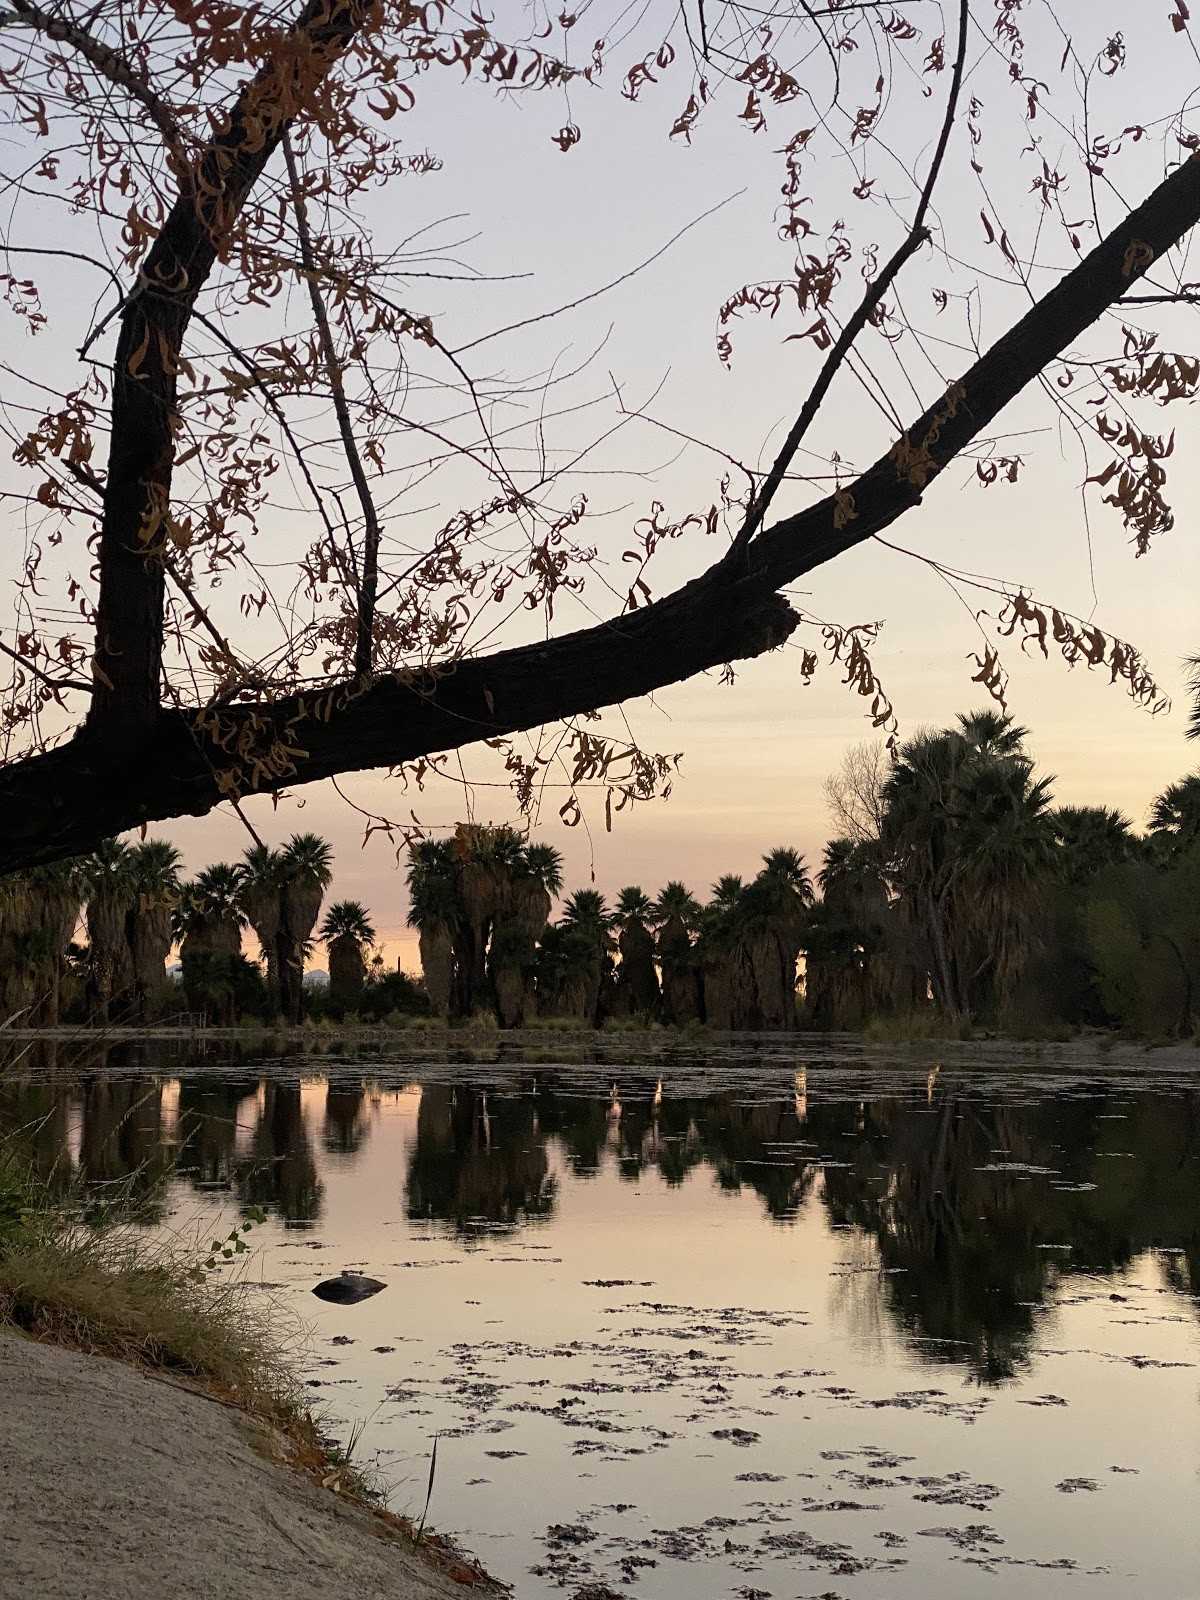  Agua Caliente Park on Oct. 22, 2020, at sunset in Tucson, Ariz. 